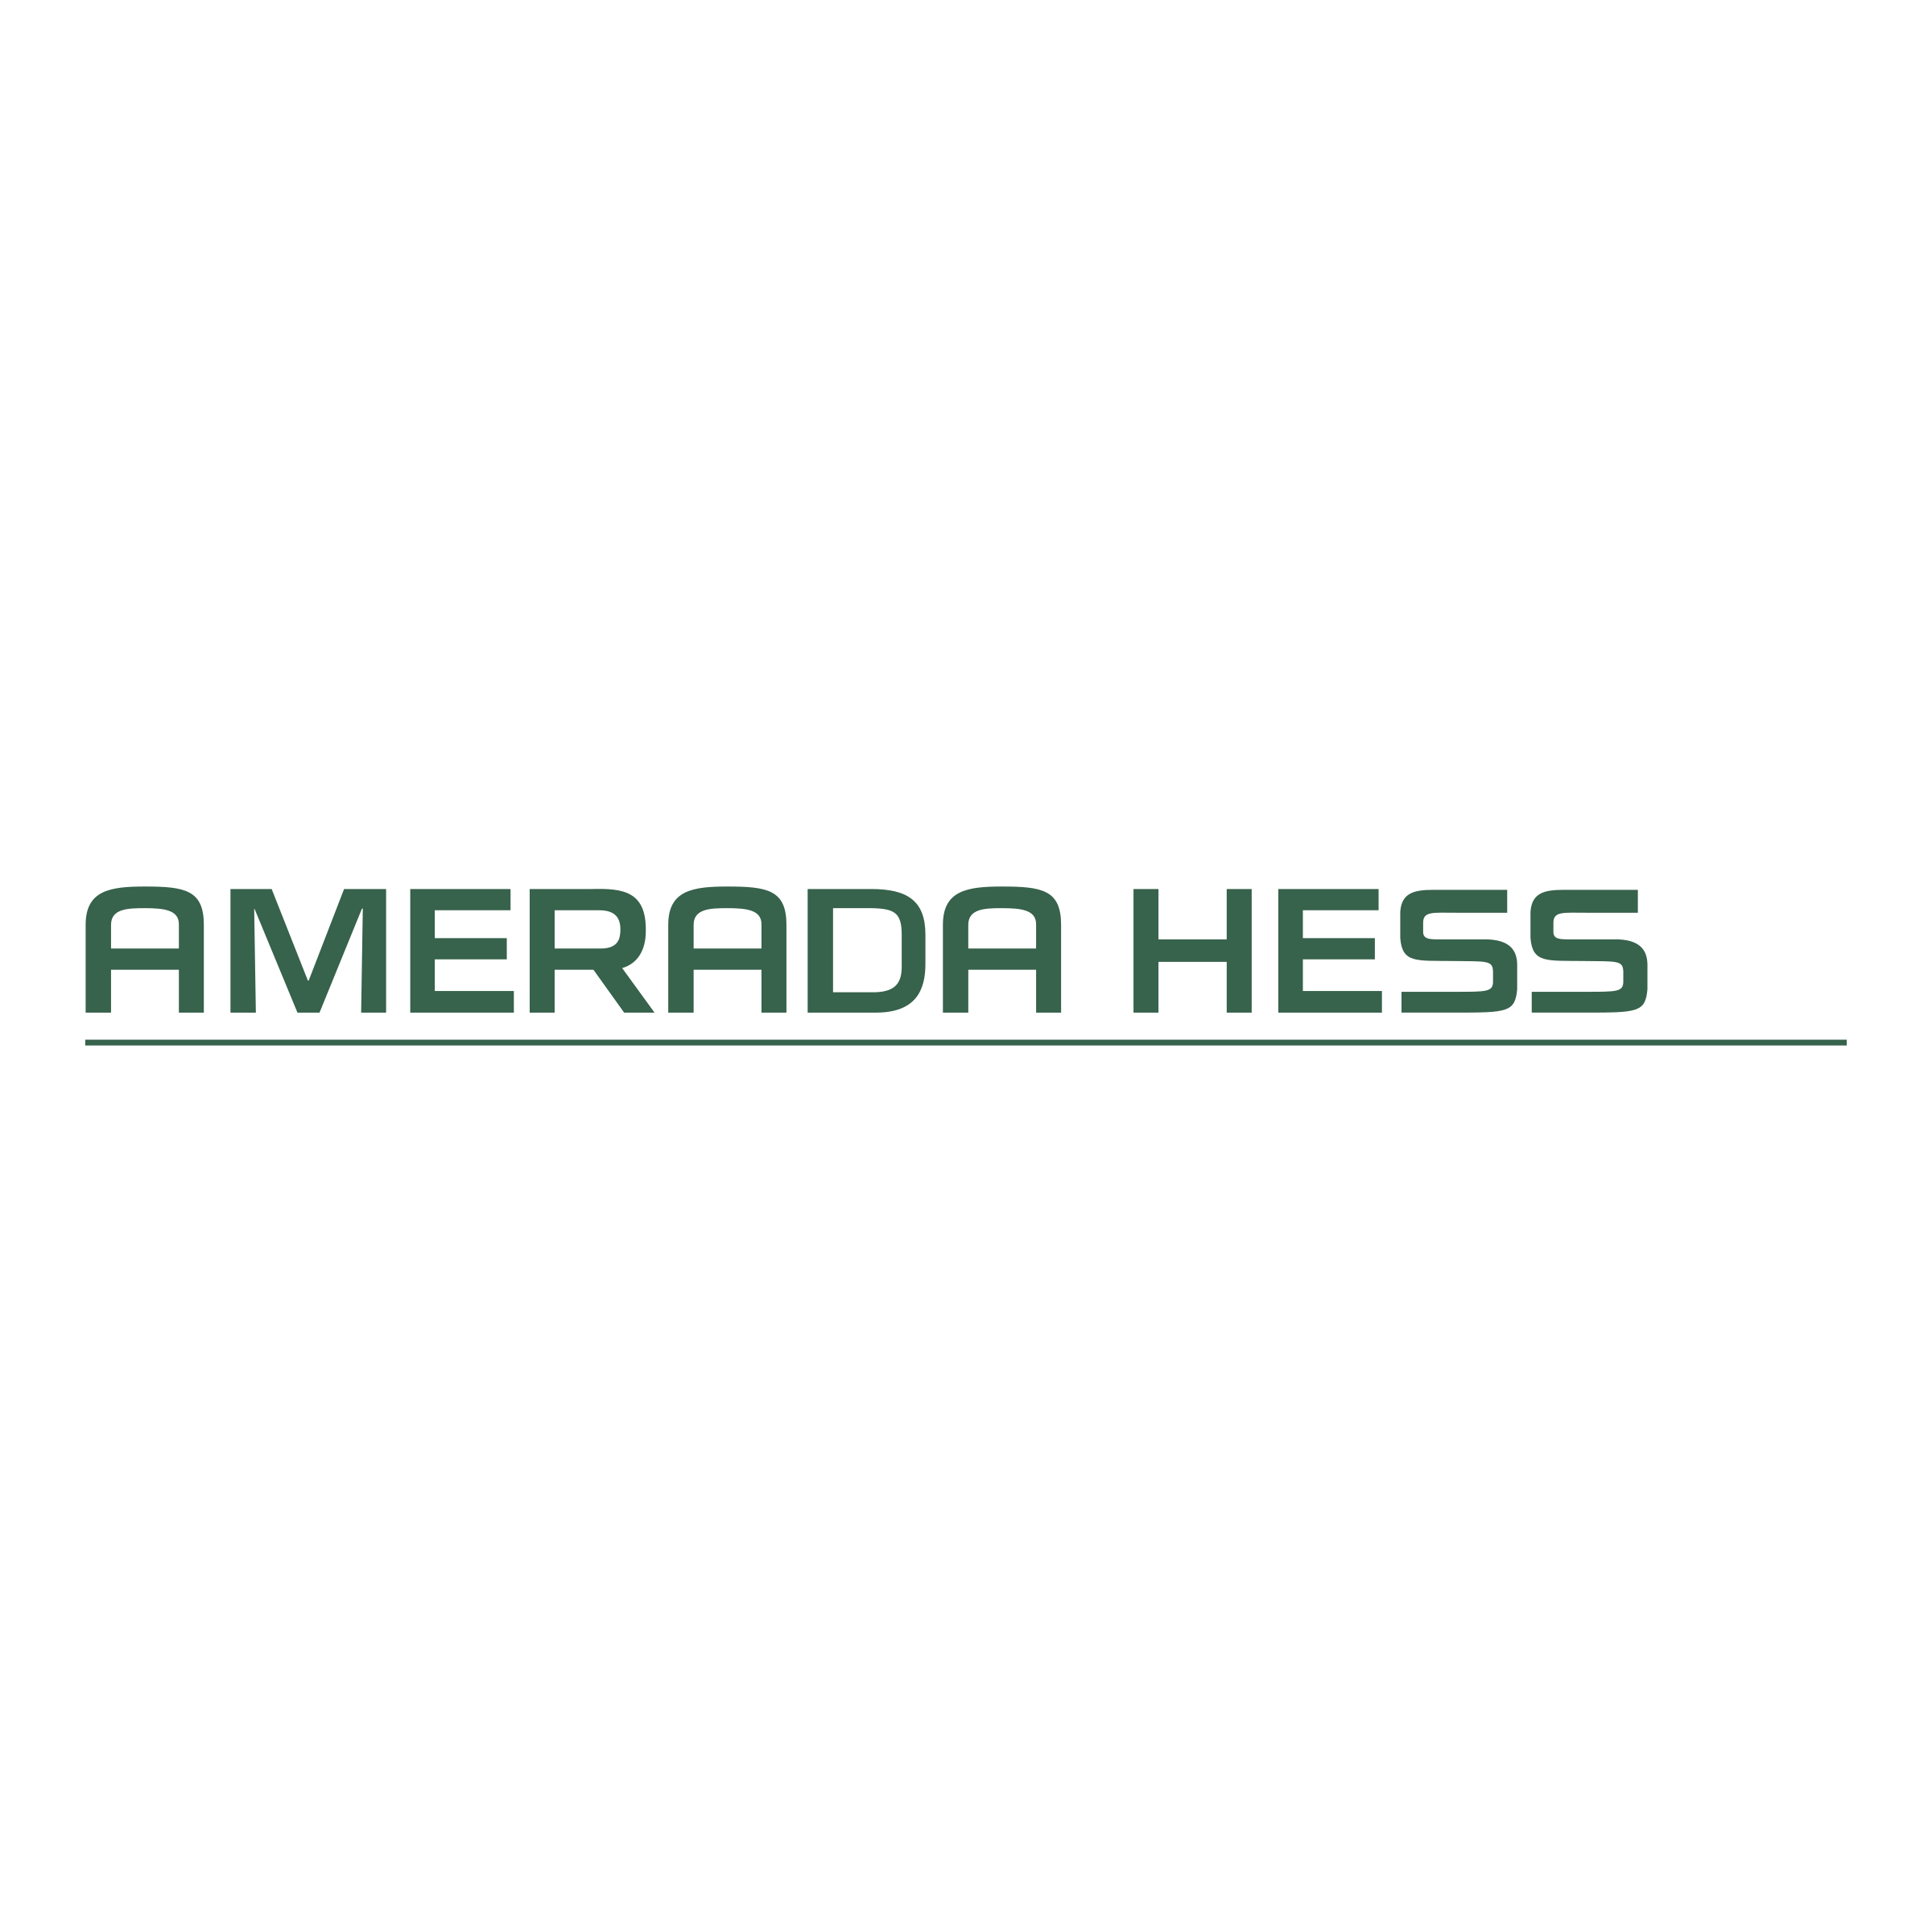 Hess Logo - Amerada Hess Logo PNG Transparent & SVG Vector - Freebie Supply